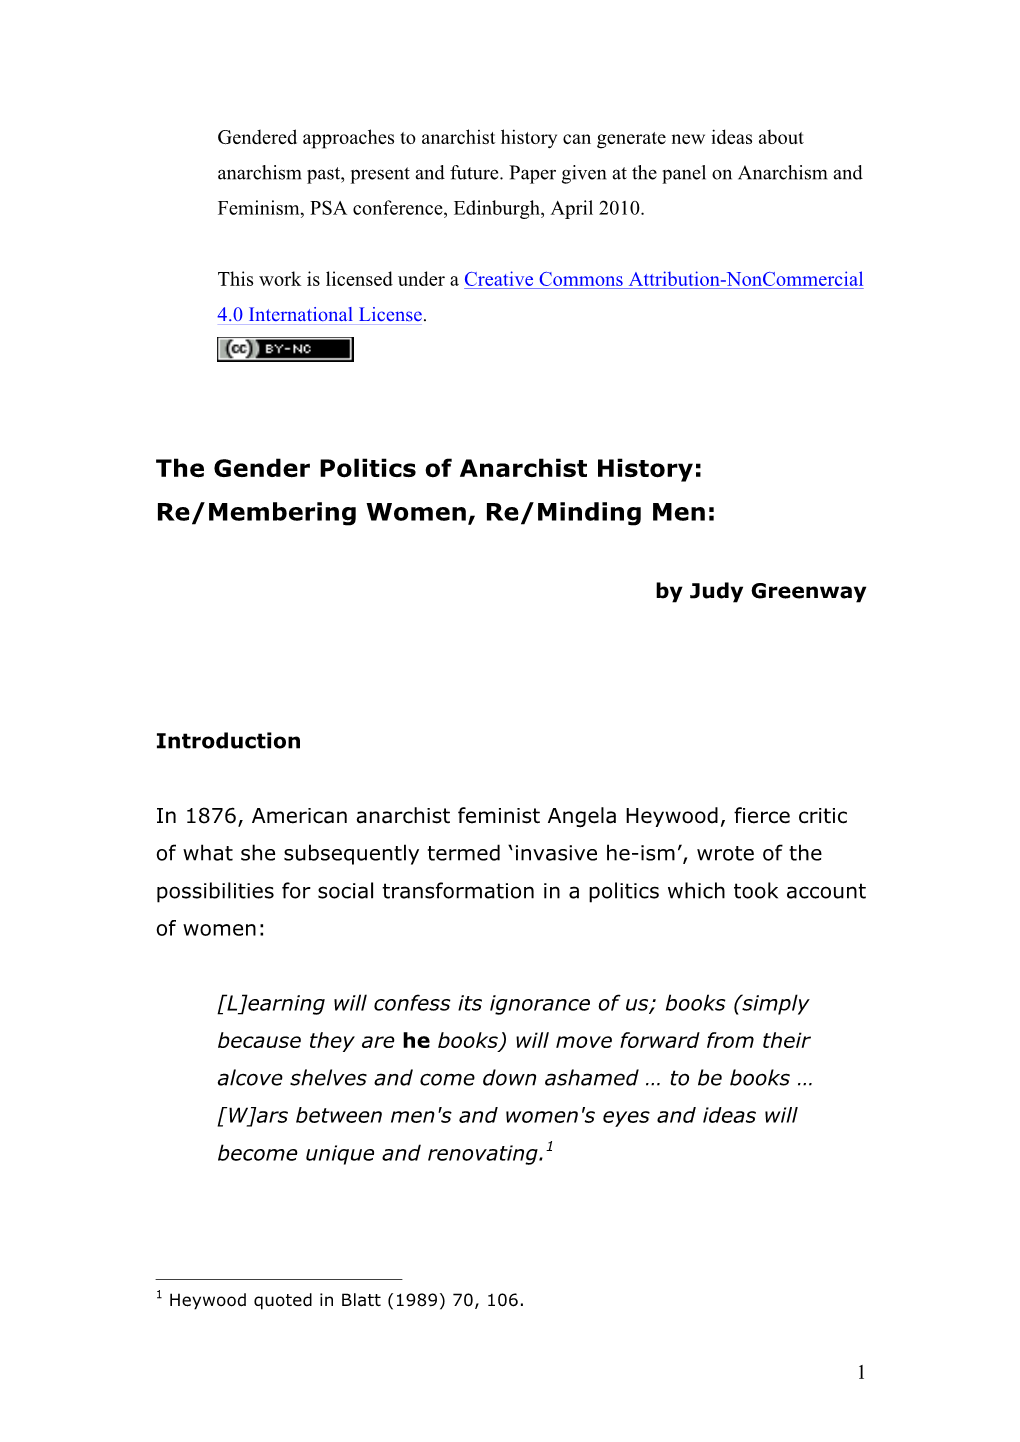 The Gender Politics of Anarchist History: Re/Membering Women, Re/Minding Men